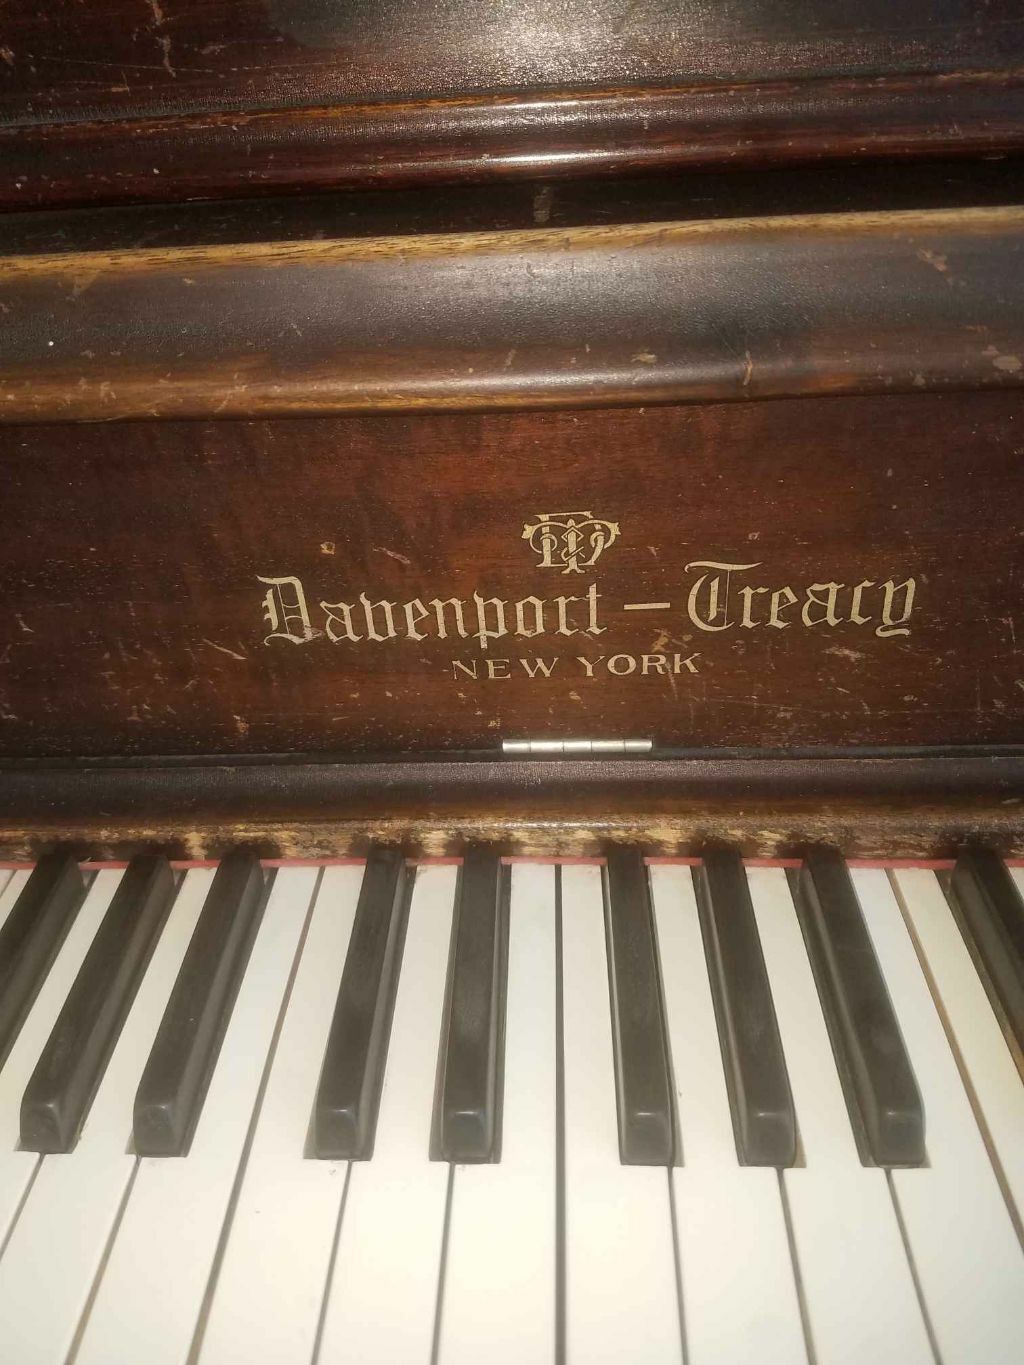 Antique Upright Piano Davenport-Treacy